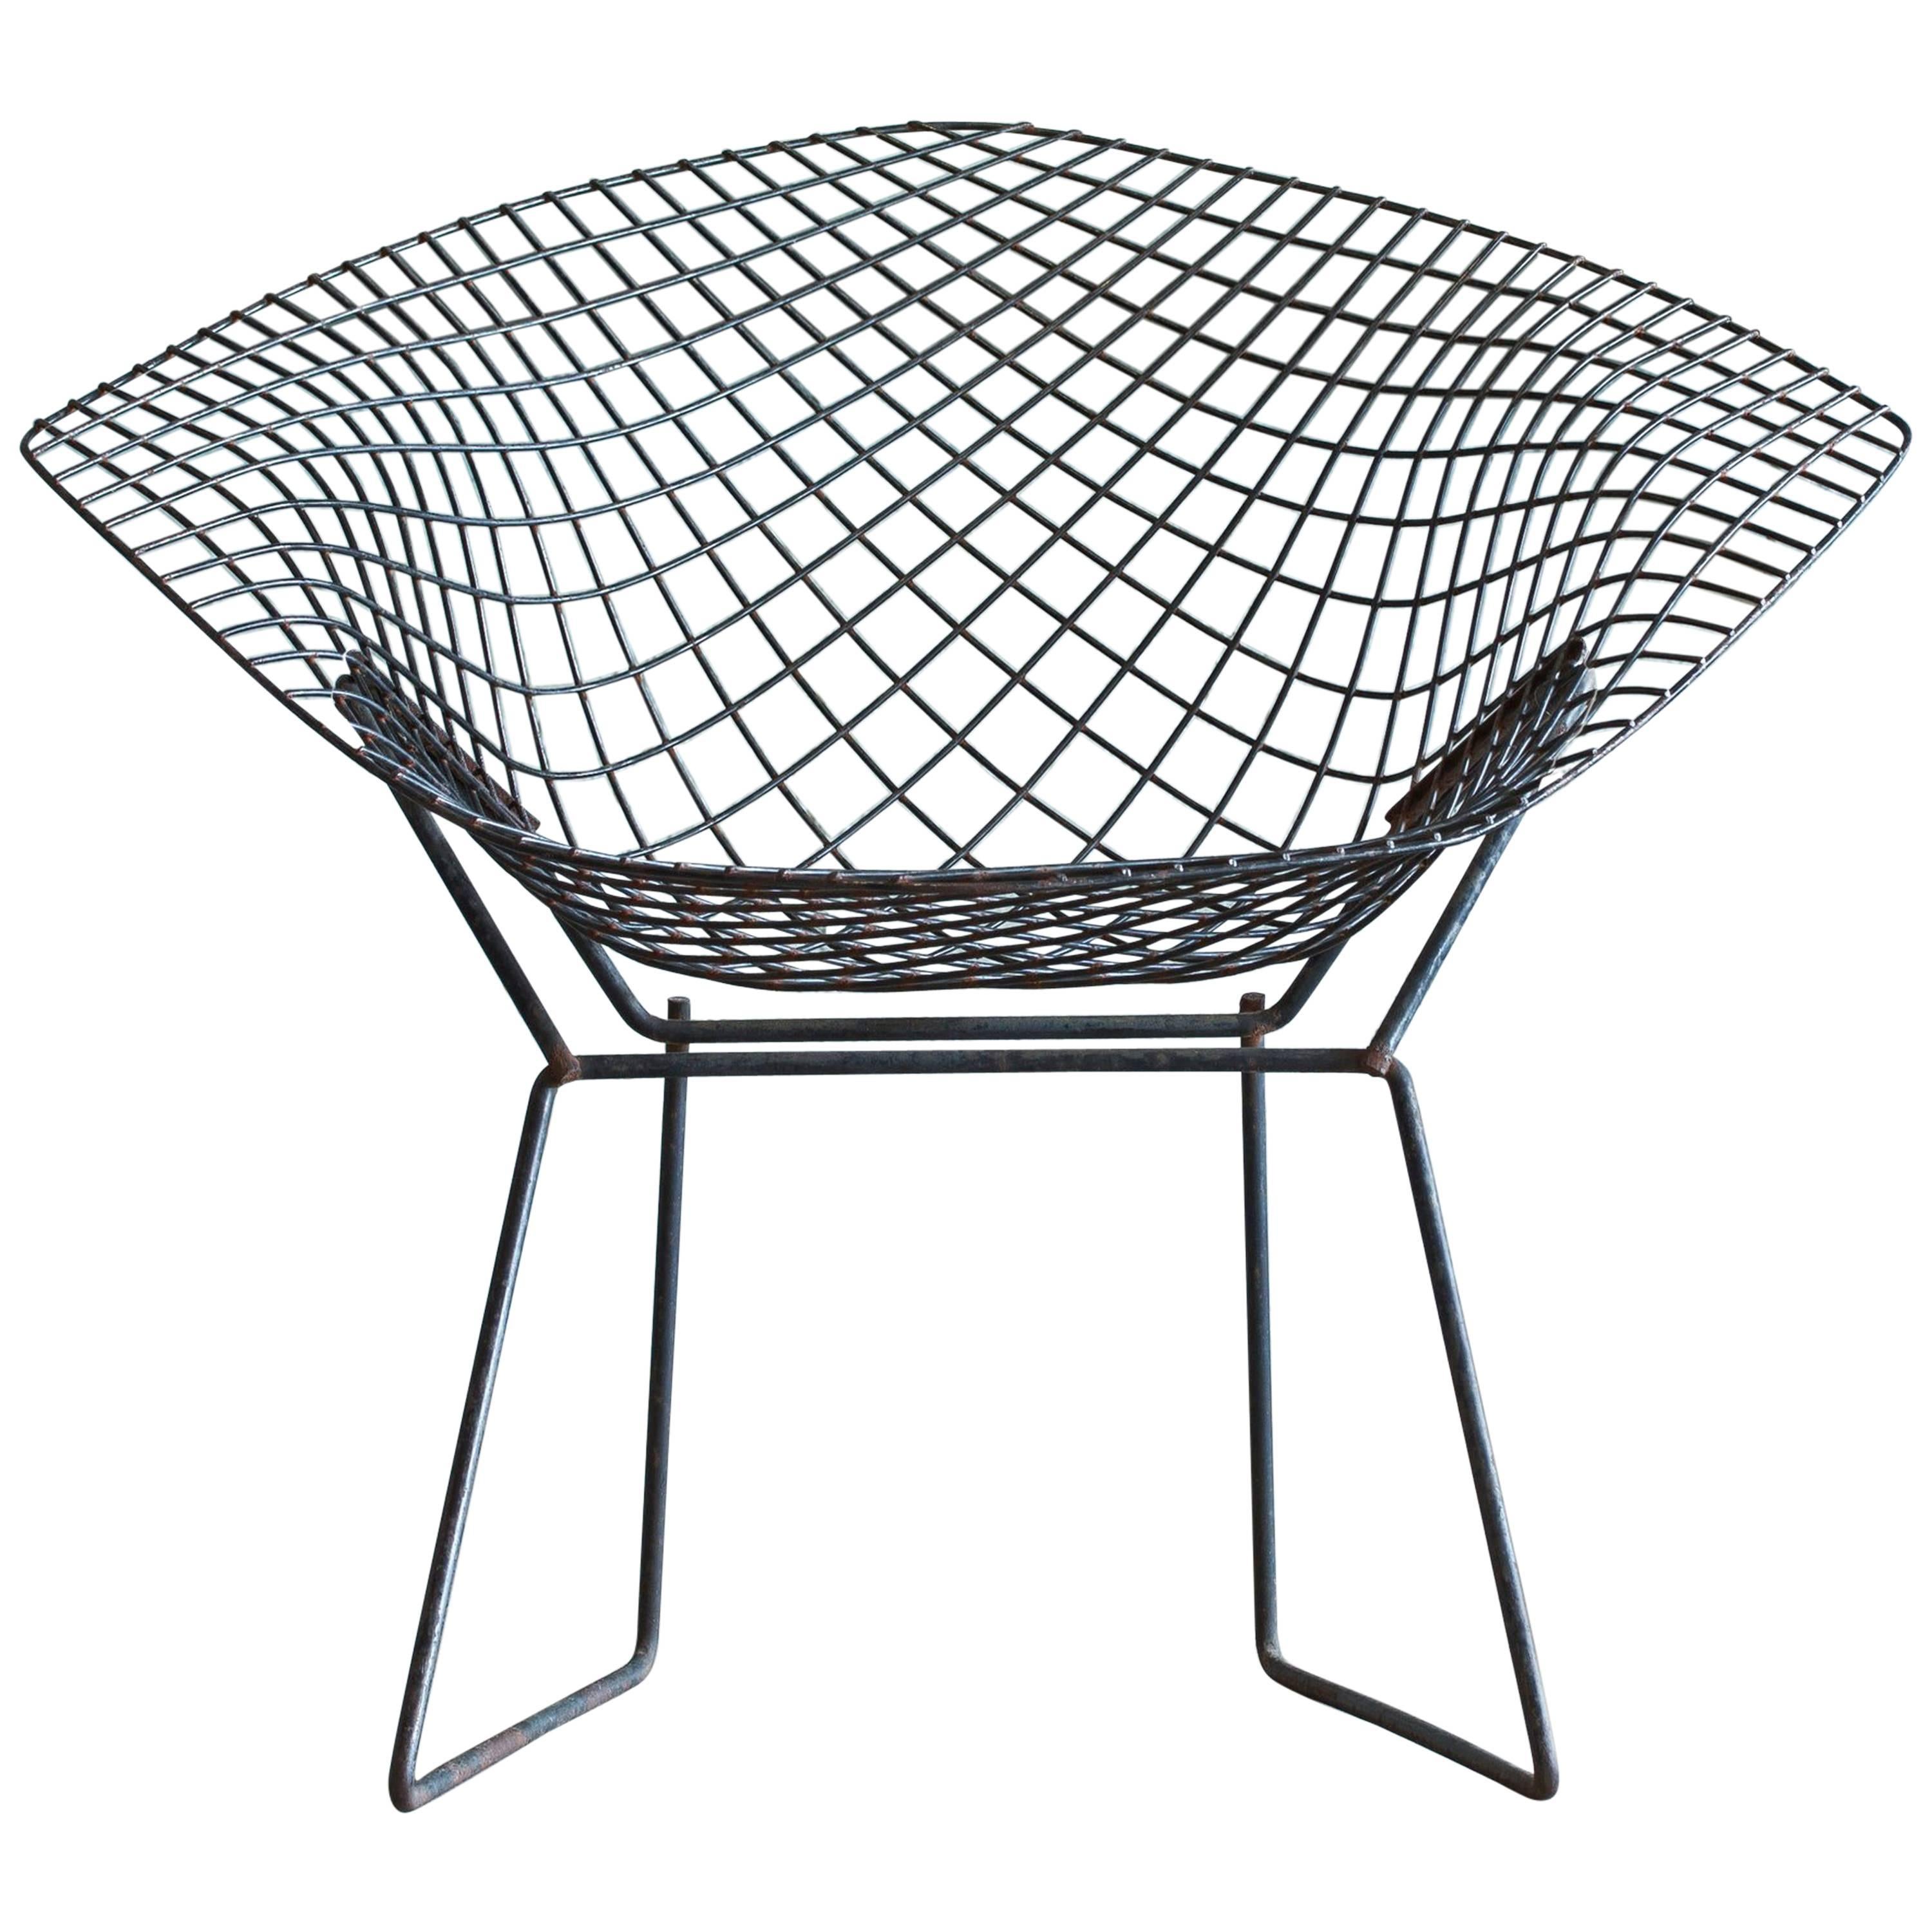 Harry Bertoia "Diamond Chair"